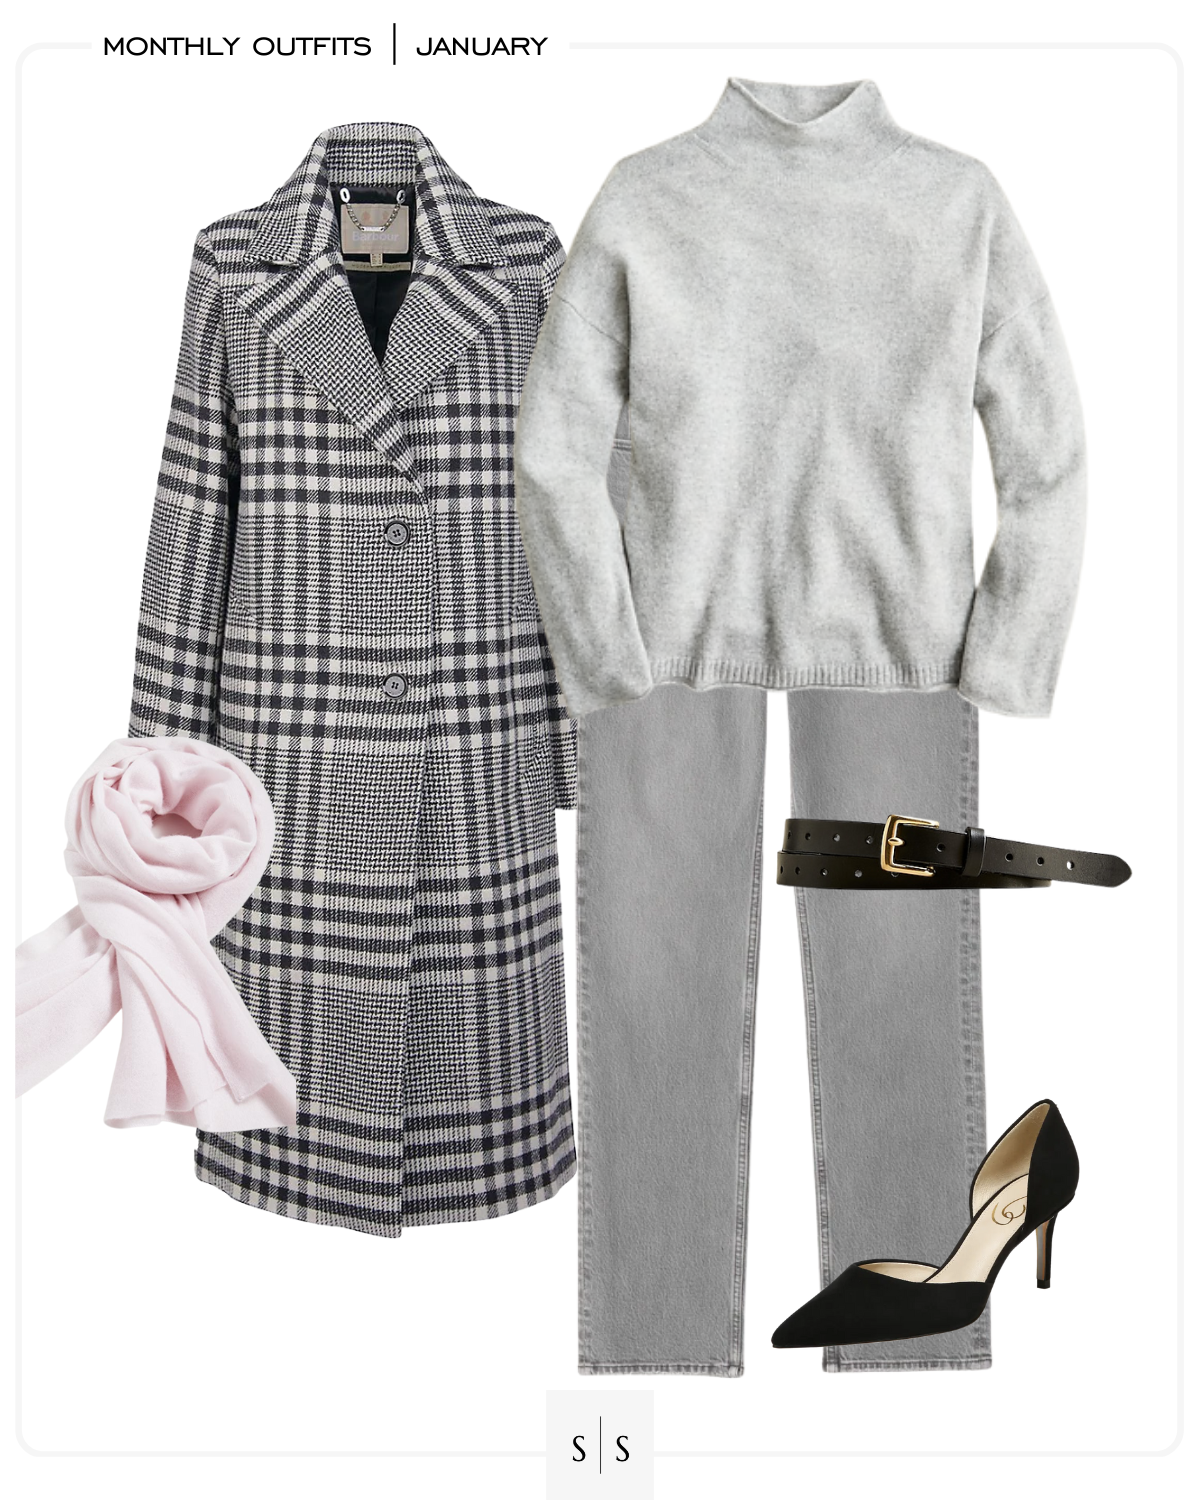 Winter monochrome outfit idea neutral grey